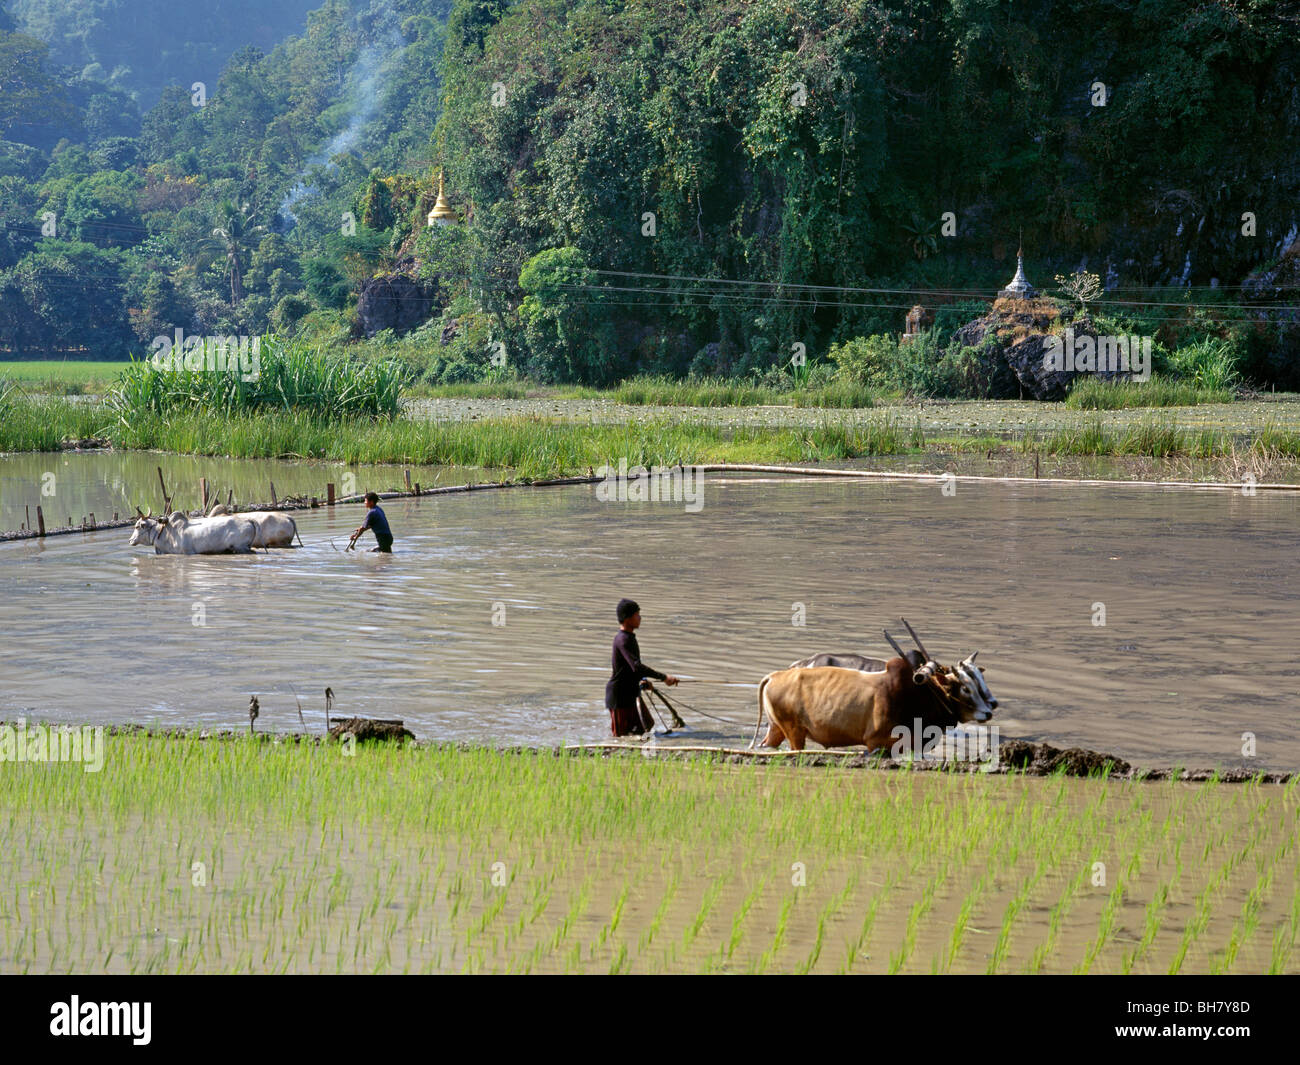 Young men plowing with oxen in the water of a rice paddy Junge Männer pflügen Naßreisfelder mit Ochsen Kayin State Myanmar Burma Stock Photo